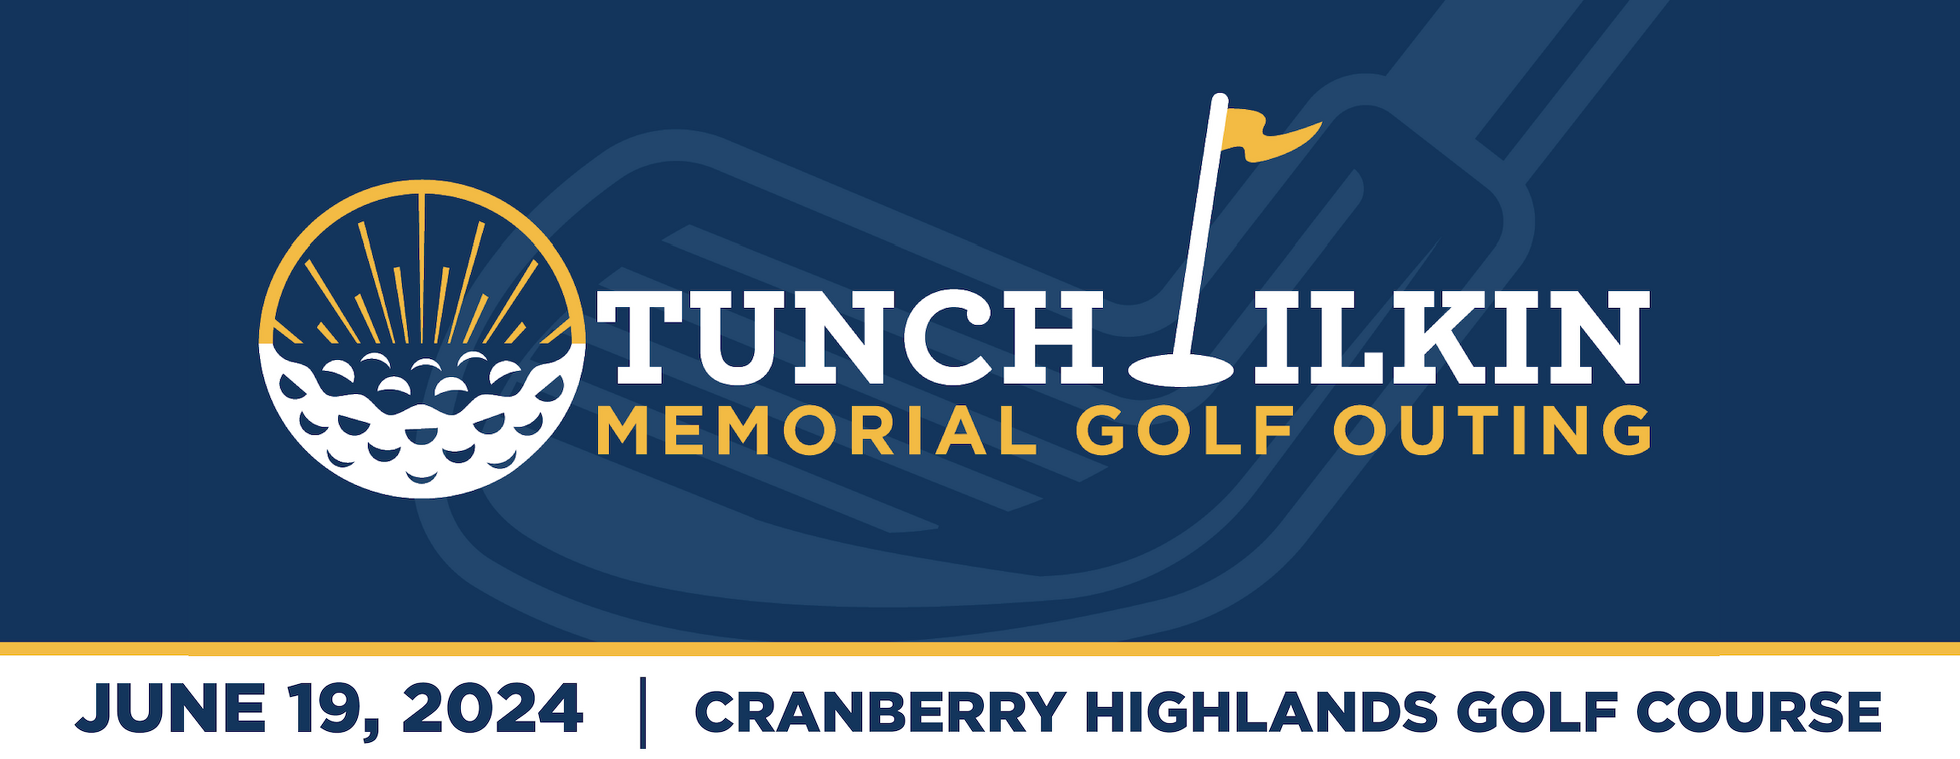 Tunch Ilkin Memorial Golf Outing 2024